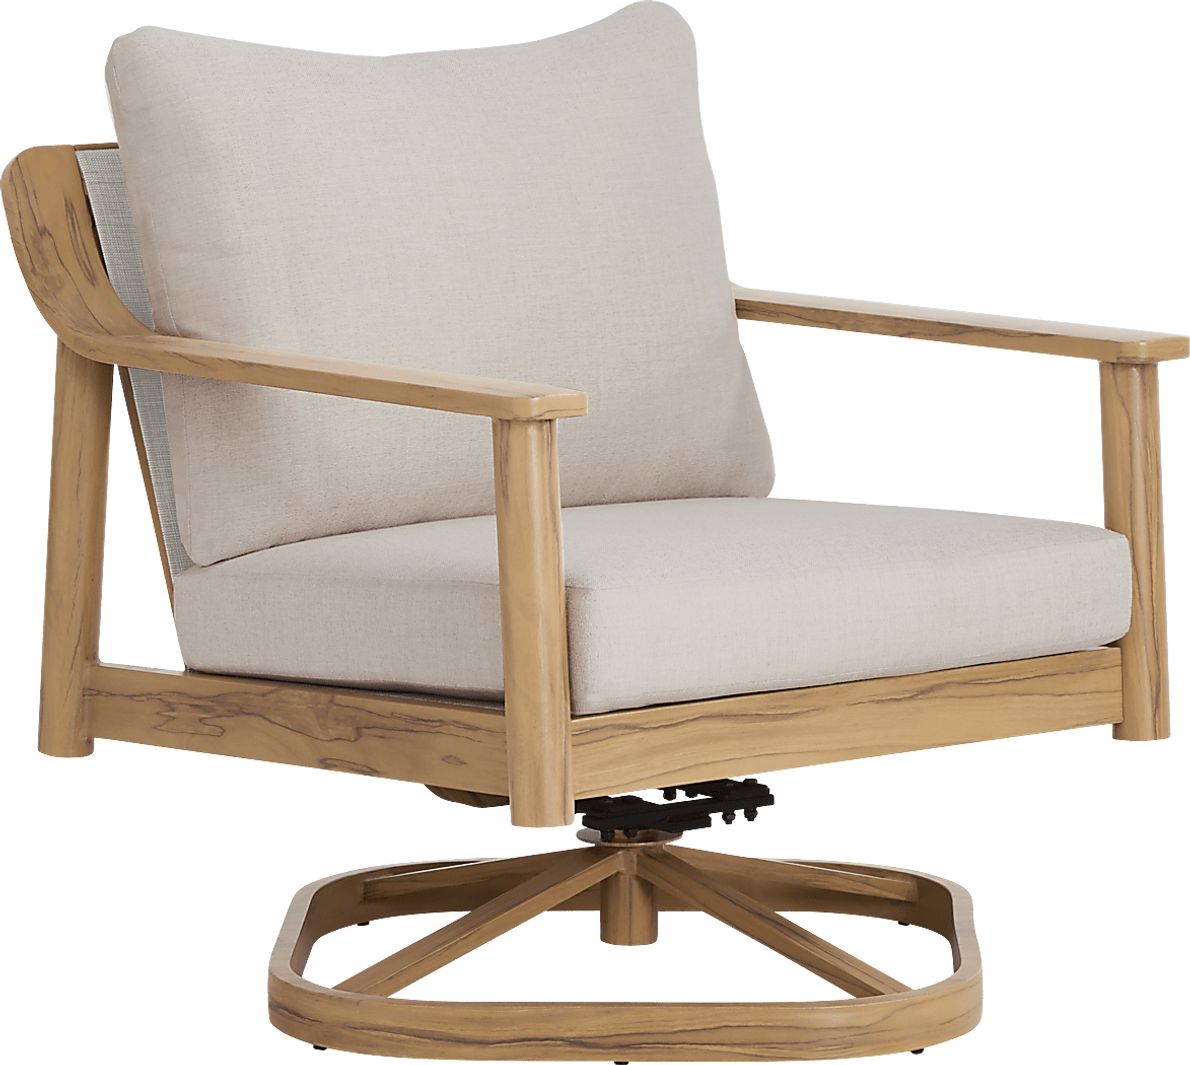 Logen Natural Outdoor Swivel Rocker Arm Chair with Beige Cushions